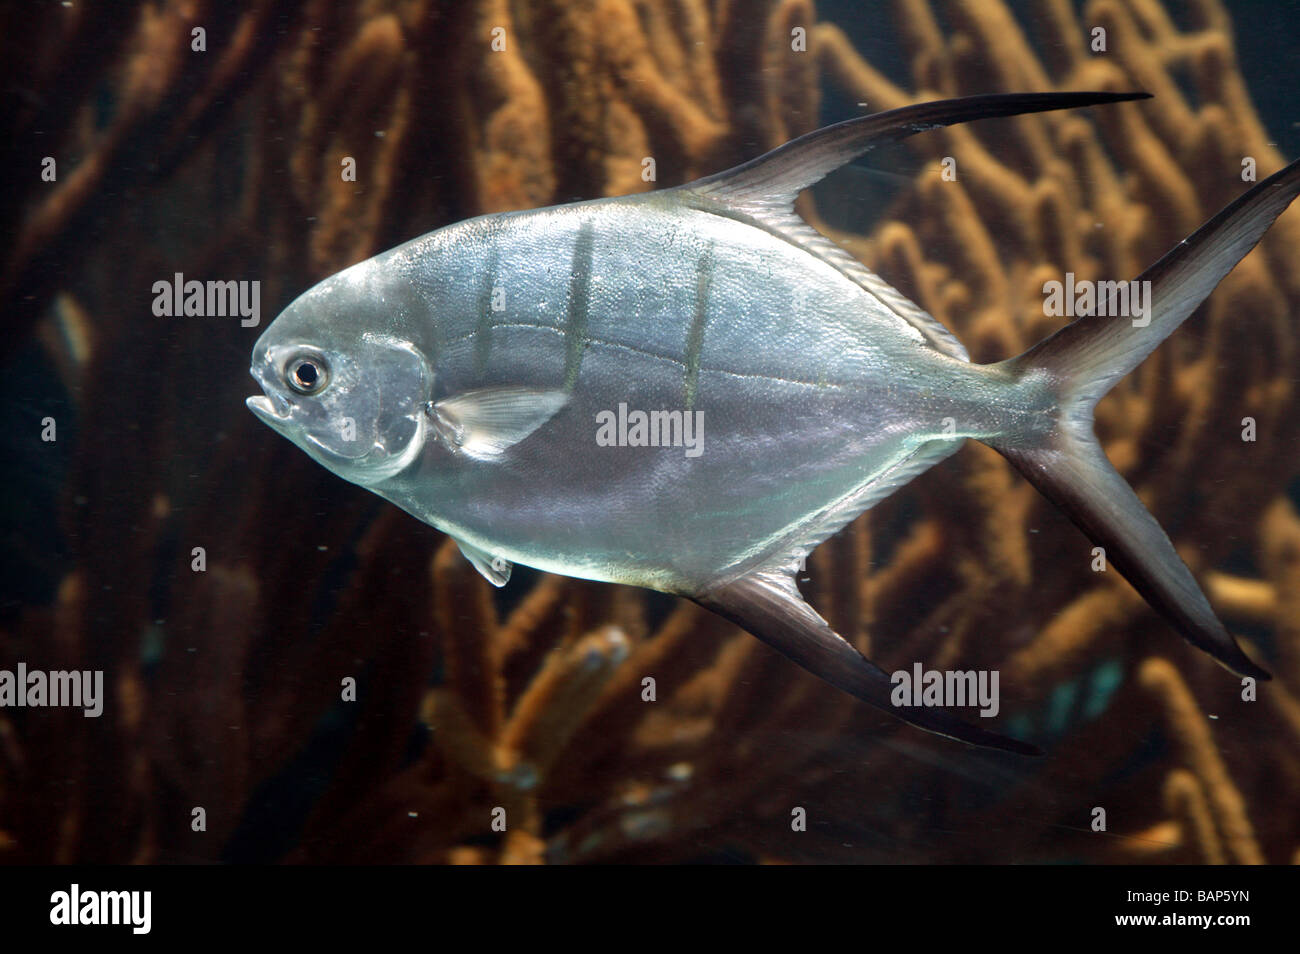 Close-up of a fish swimmimg in Bermuda Aquarium Stock Photo